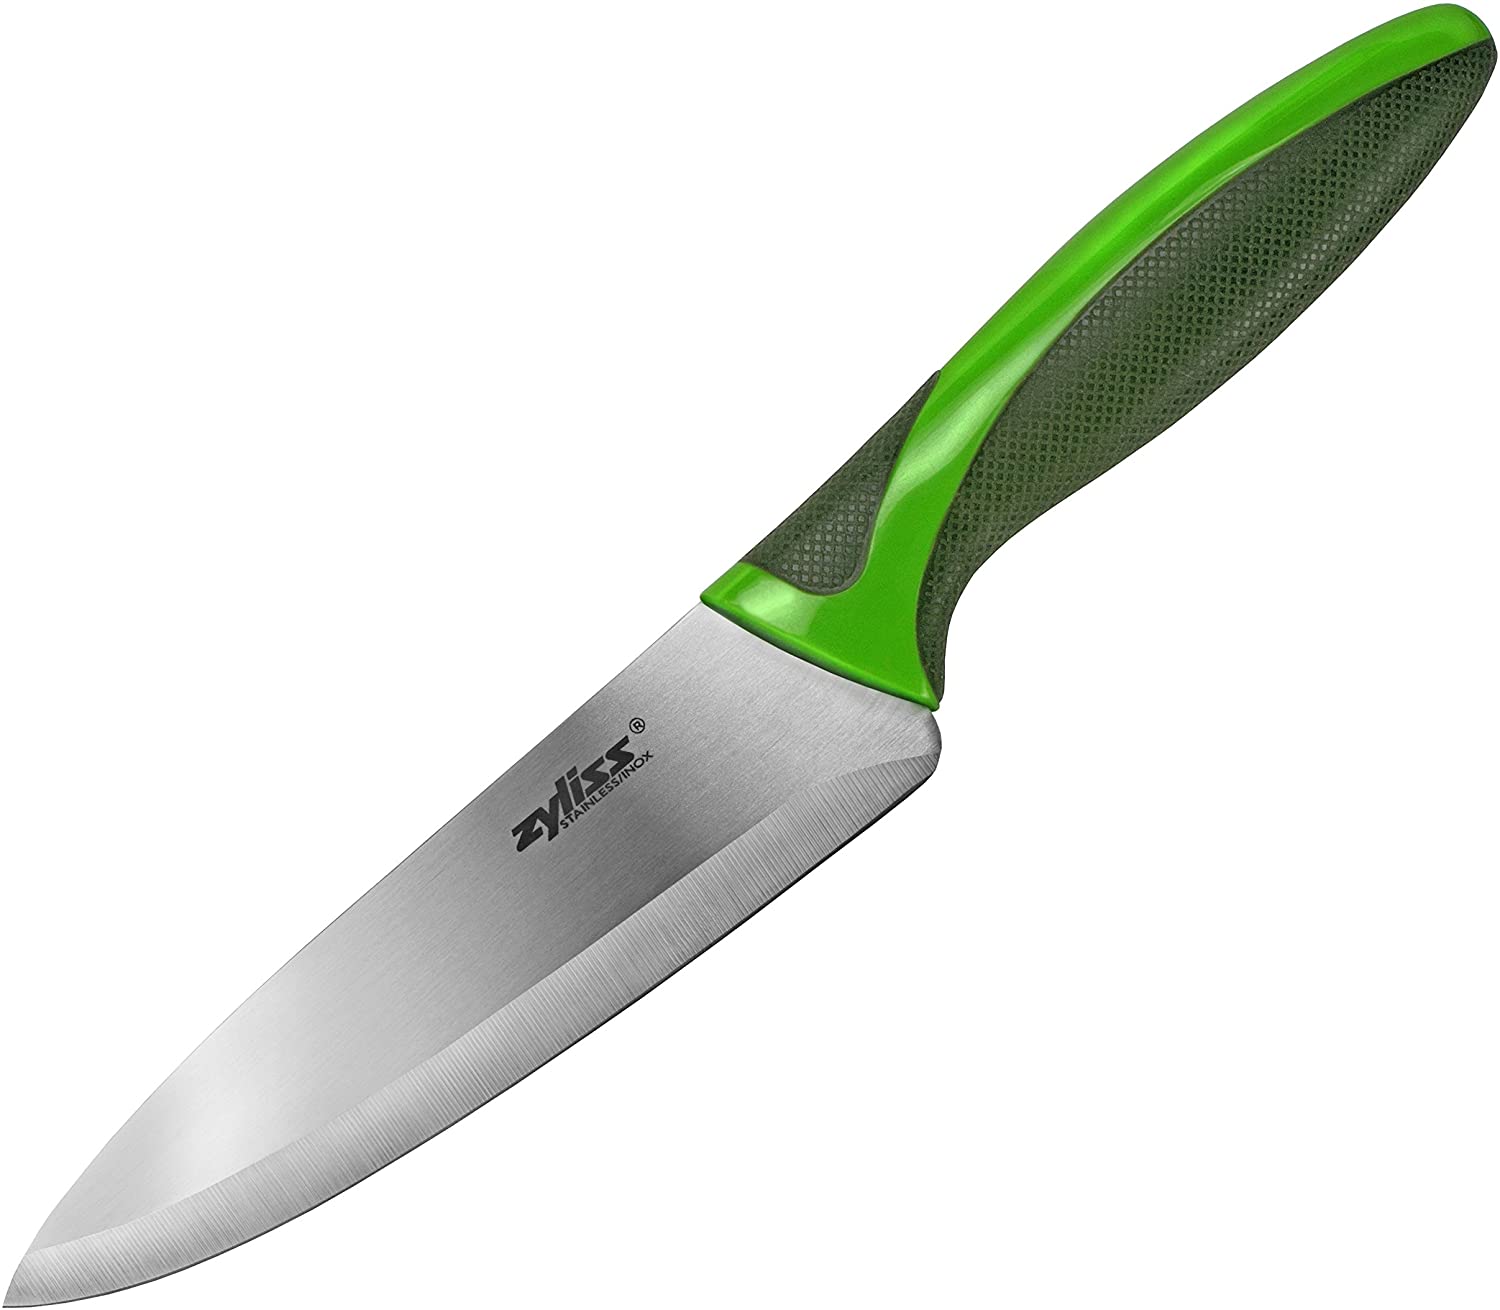 Zyliss E72410 Utility Knife 14 cm Green